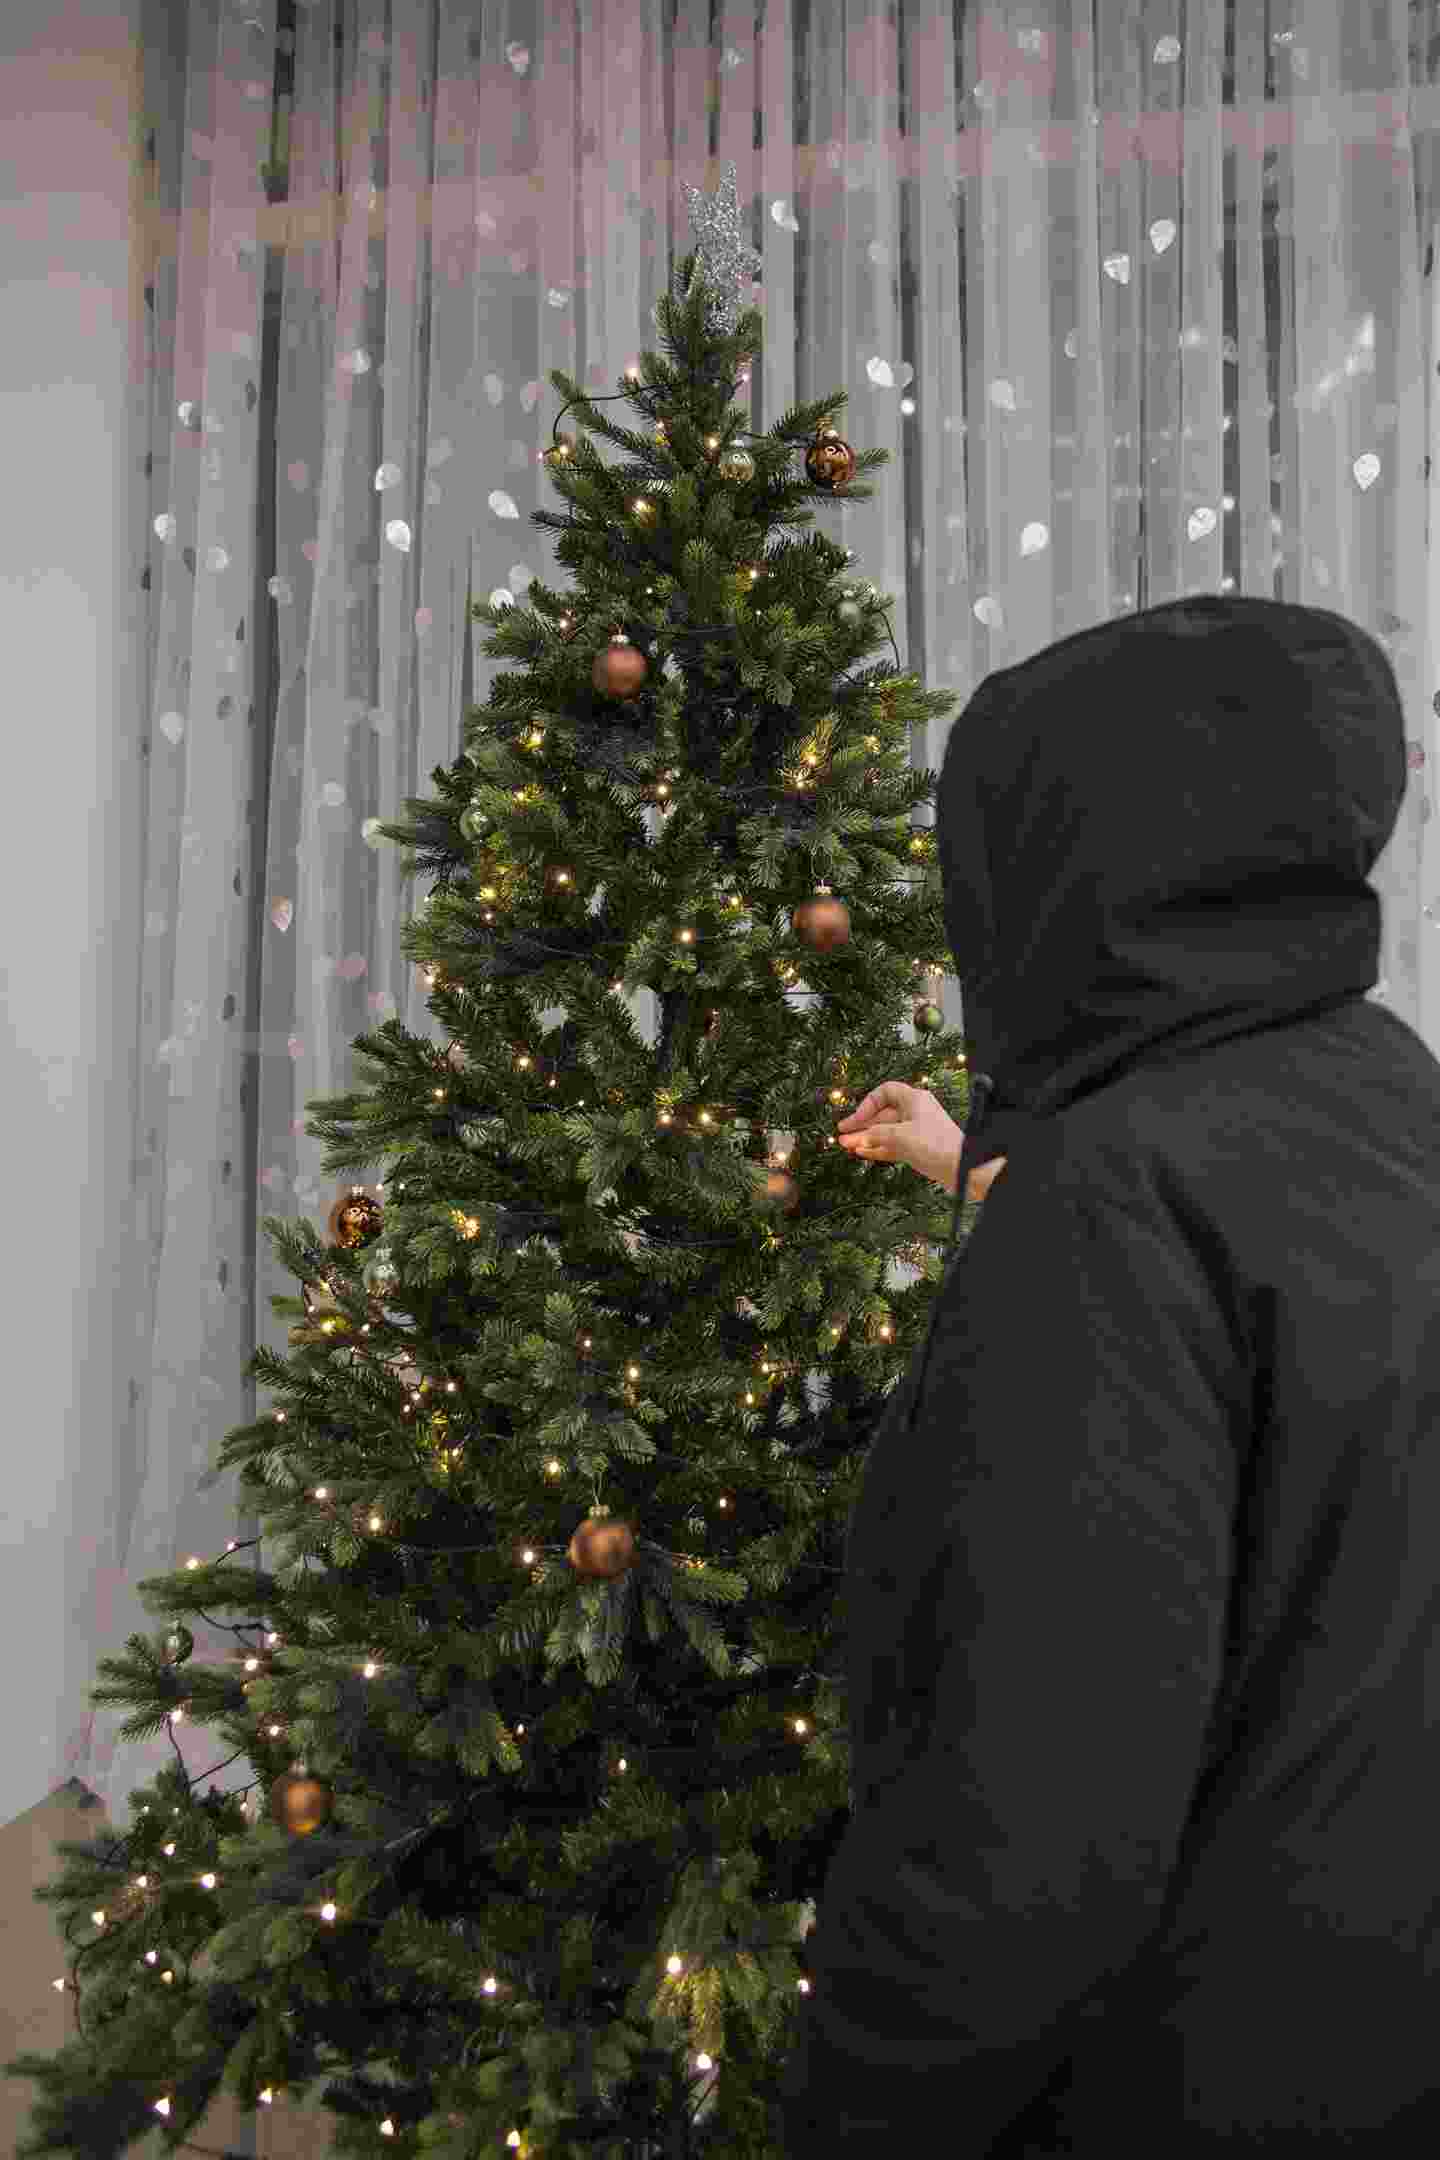 A person placing Christmas lights on a Christmas tree.